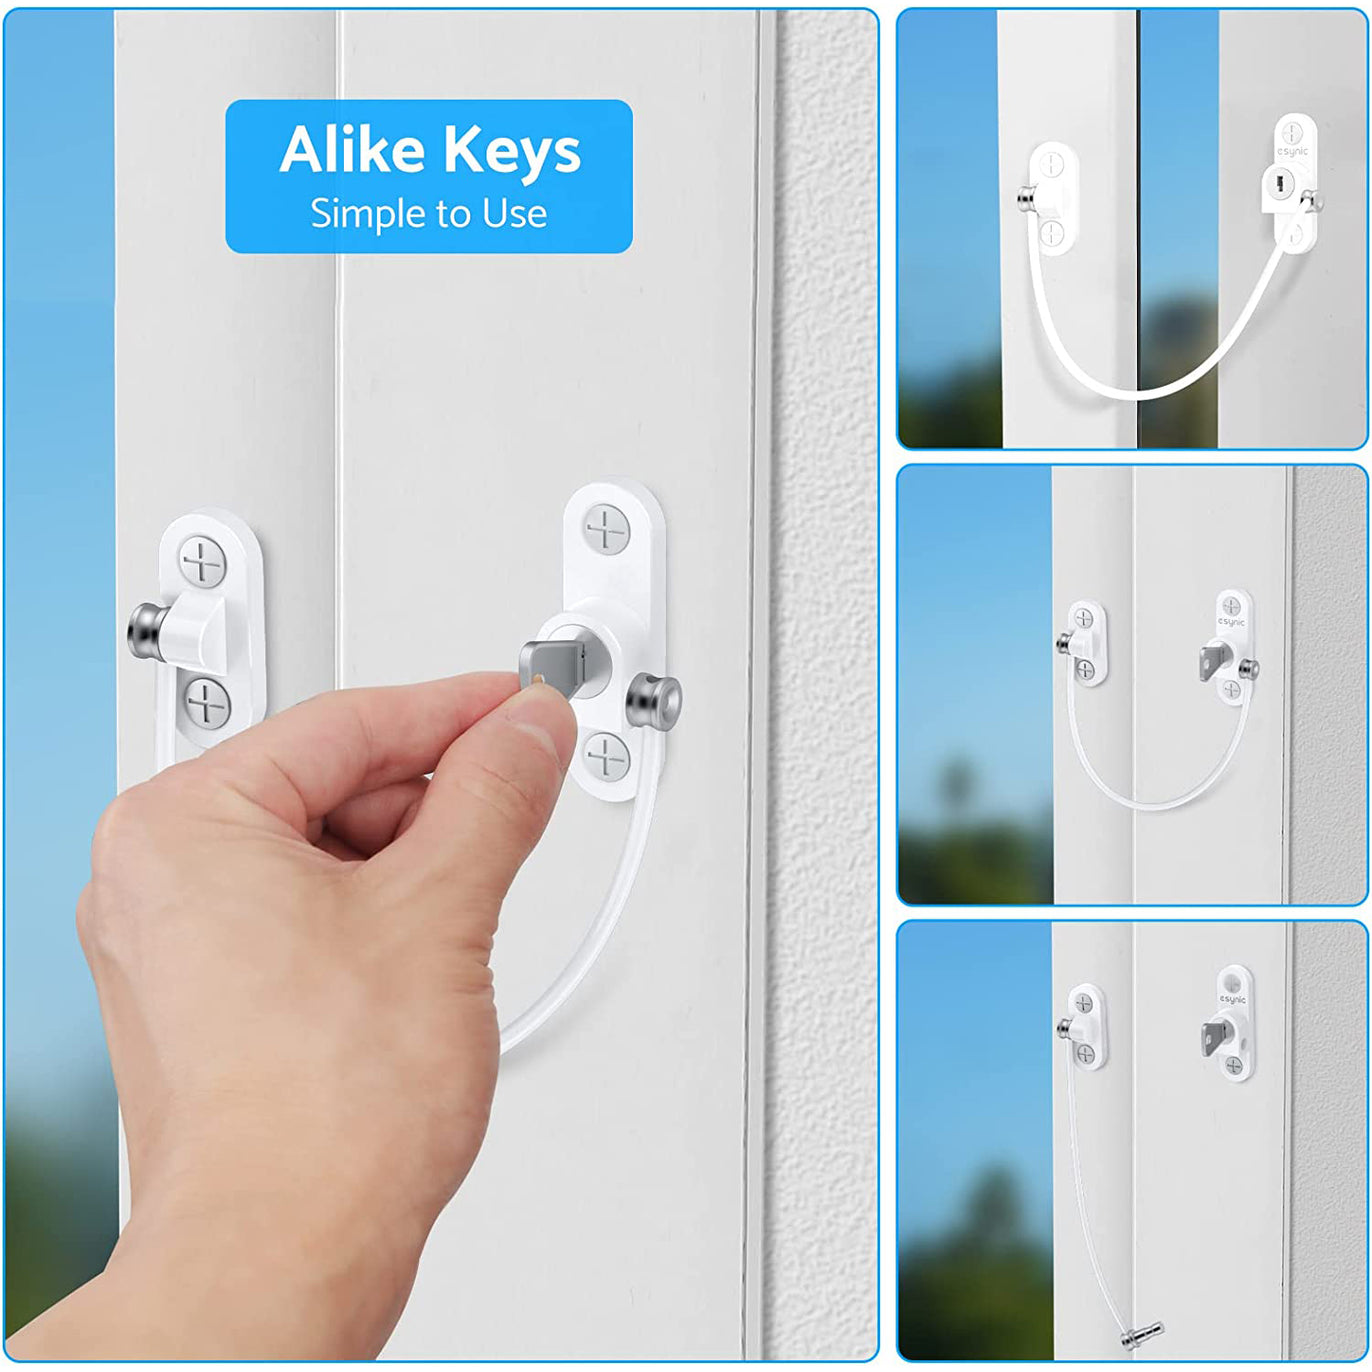 eSynic 4pcs Kids Window Restrictor Locks Window Lock UPVC - White